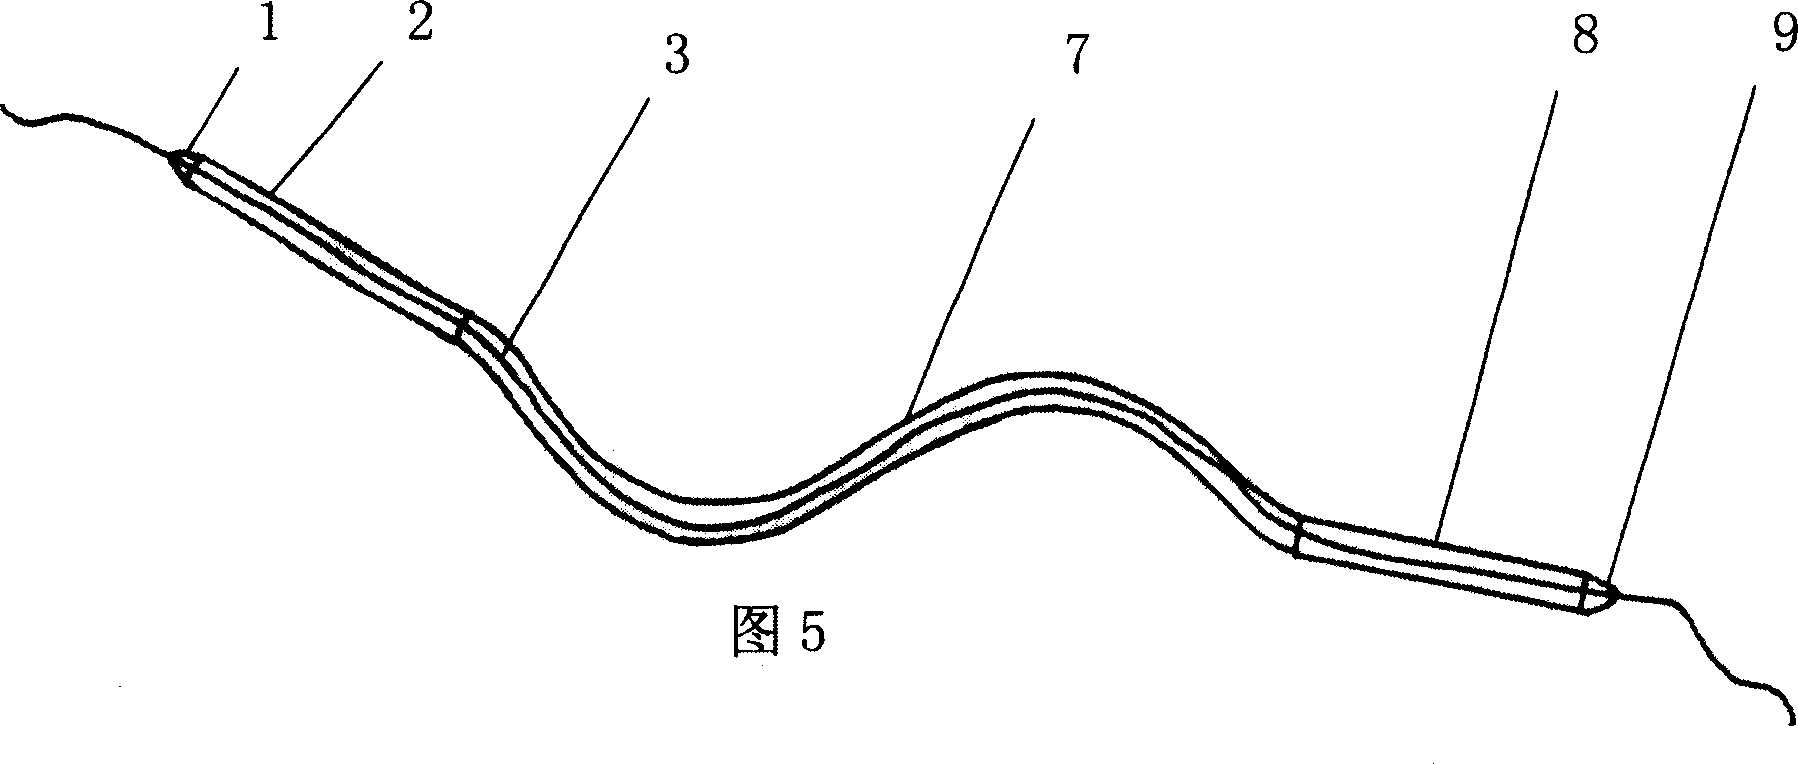 Irrigation belt of polymer material